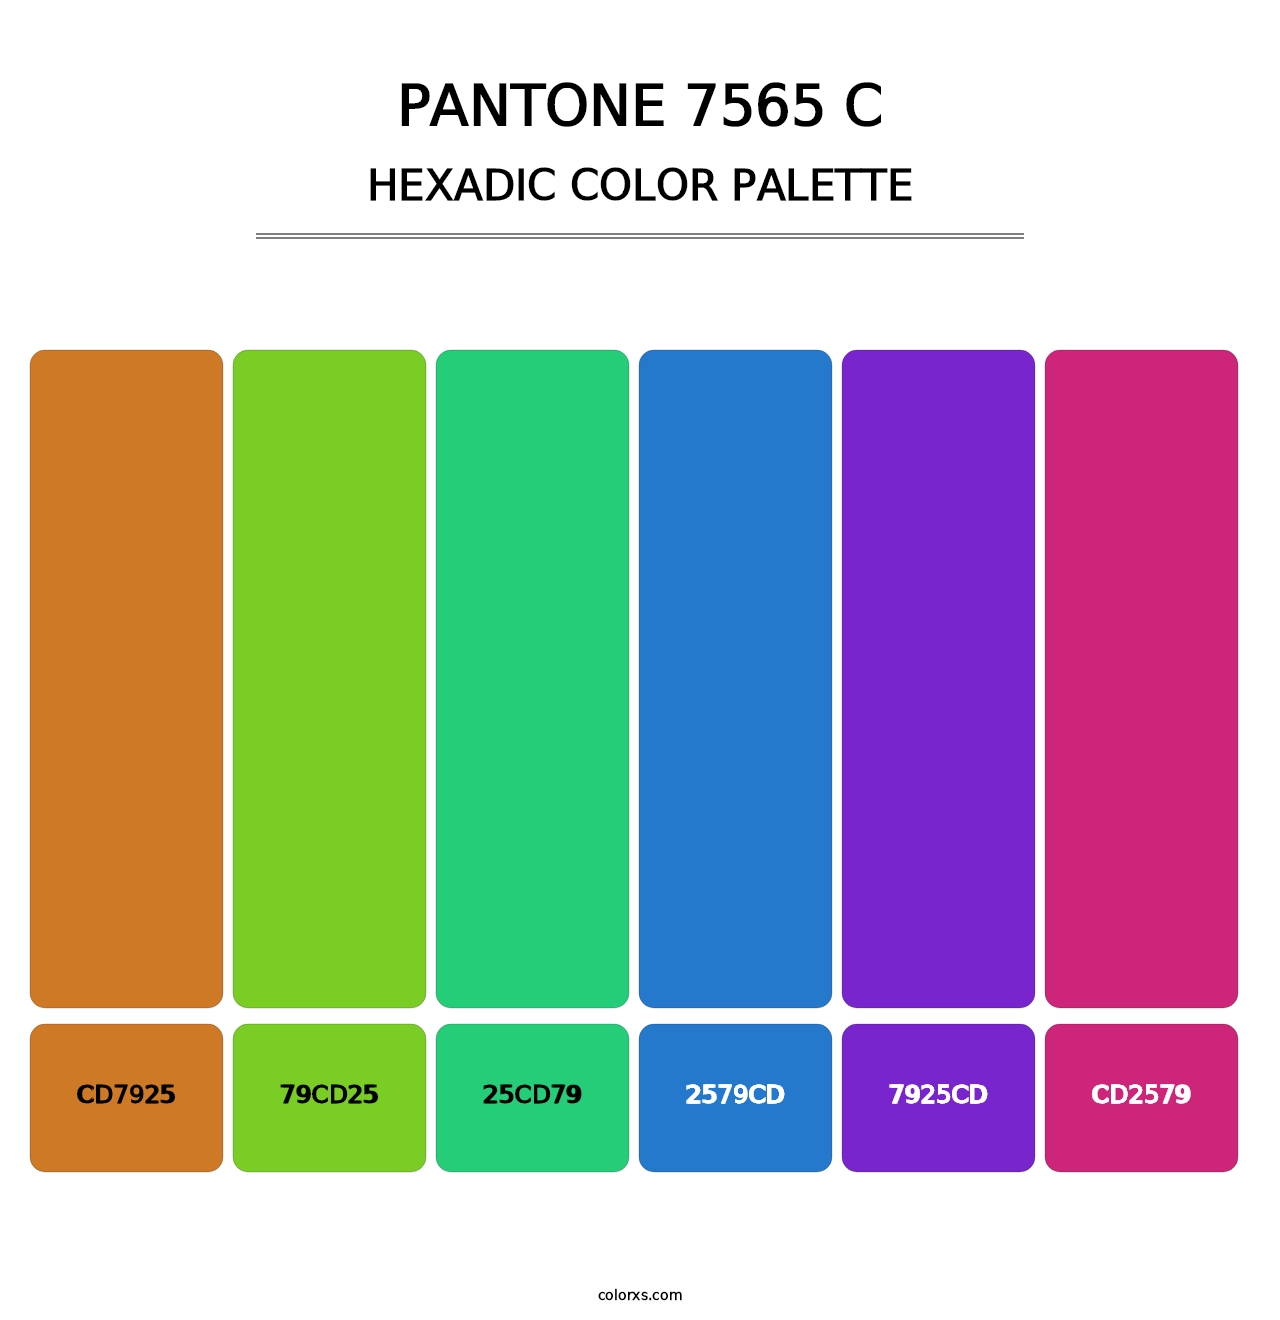 PANTONE 7565 C - Hexadic Color Palette